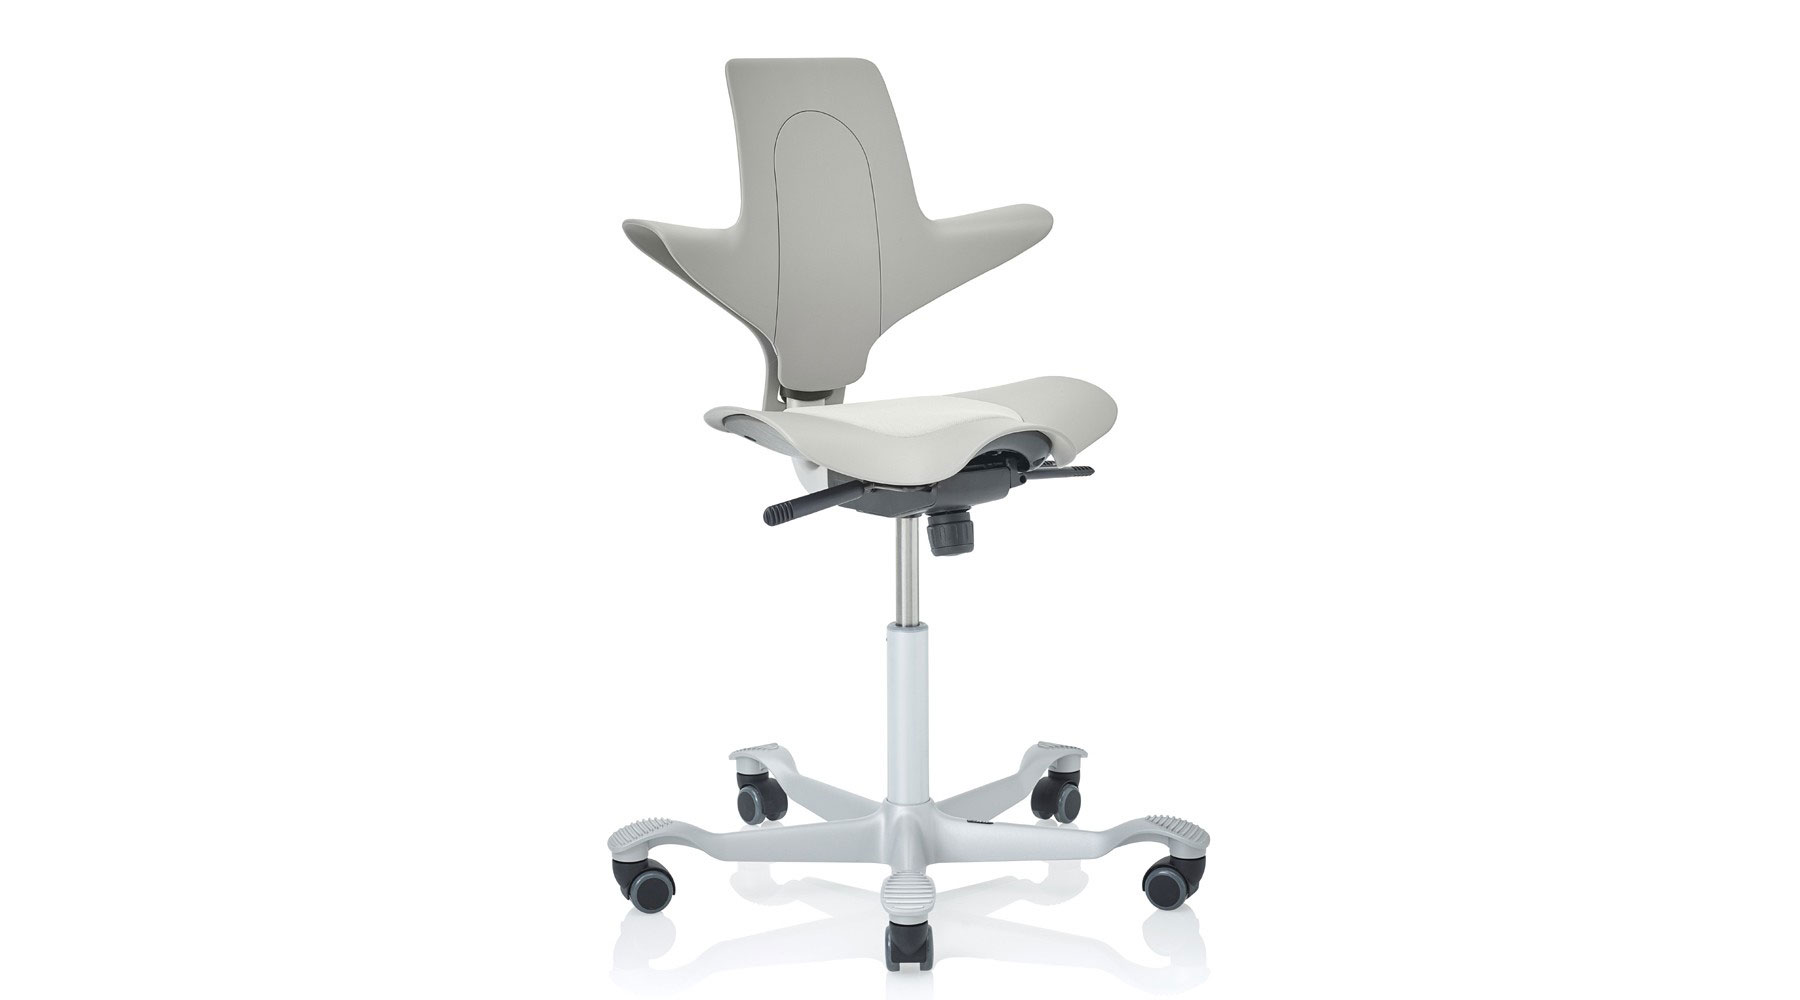 Best ergonomic office chair: HAG Capisco Puls 8010 ergonomic office chair